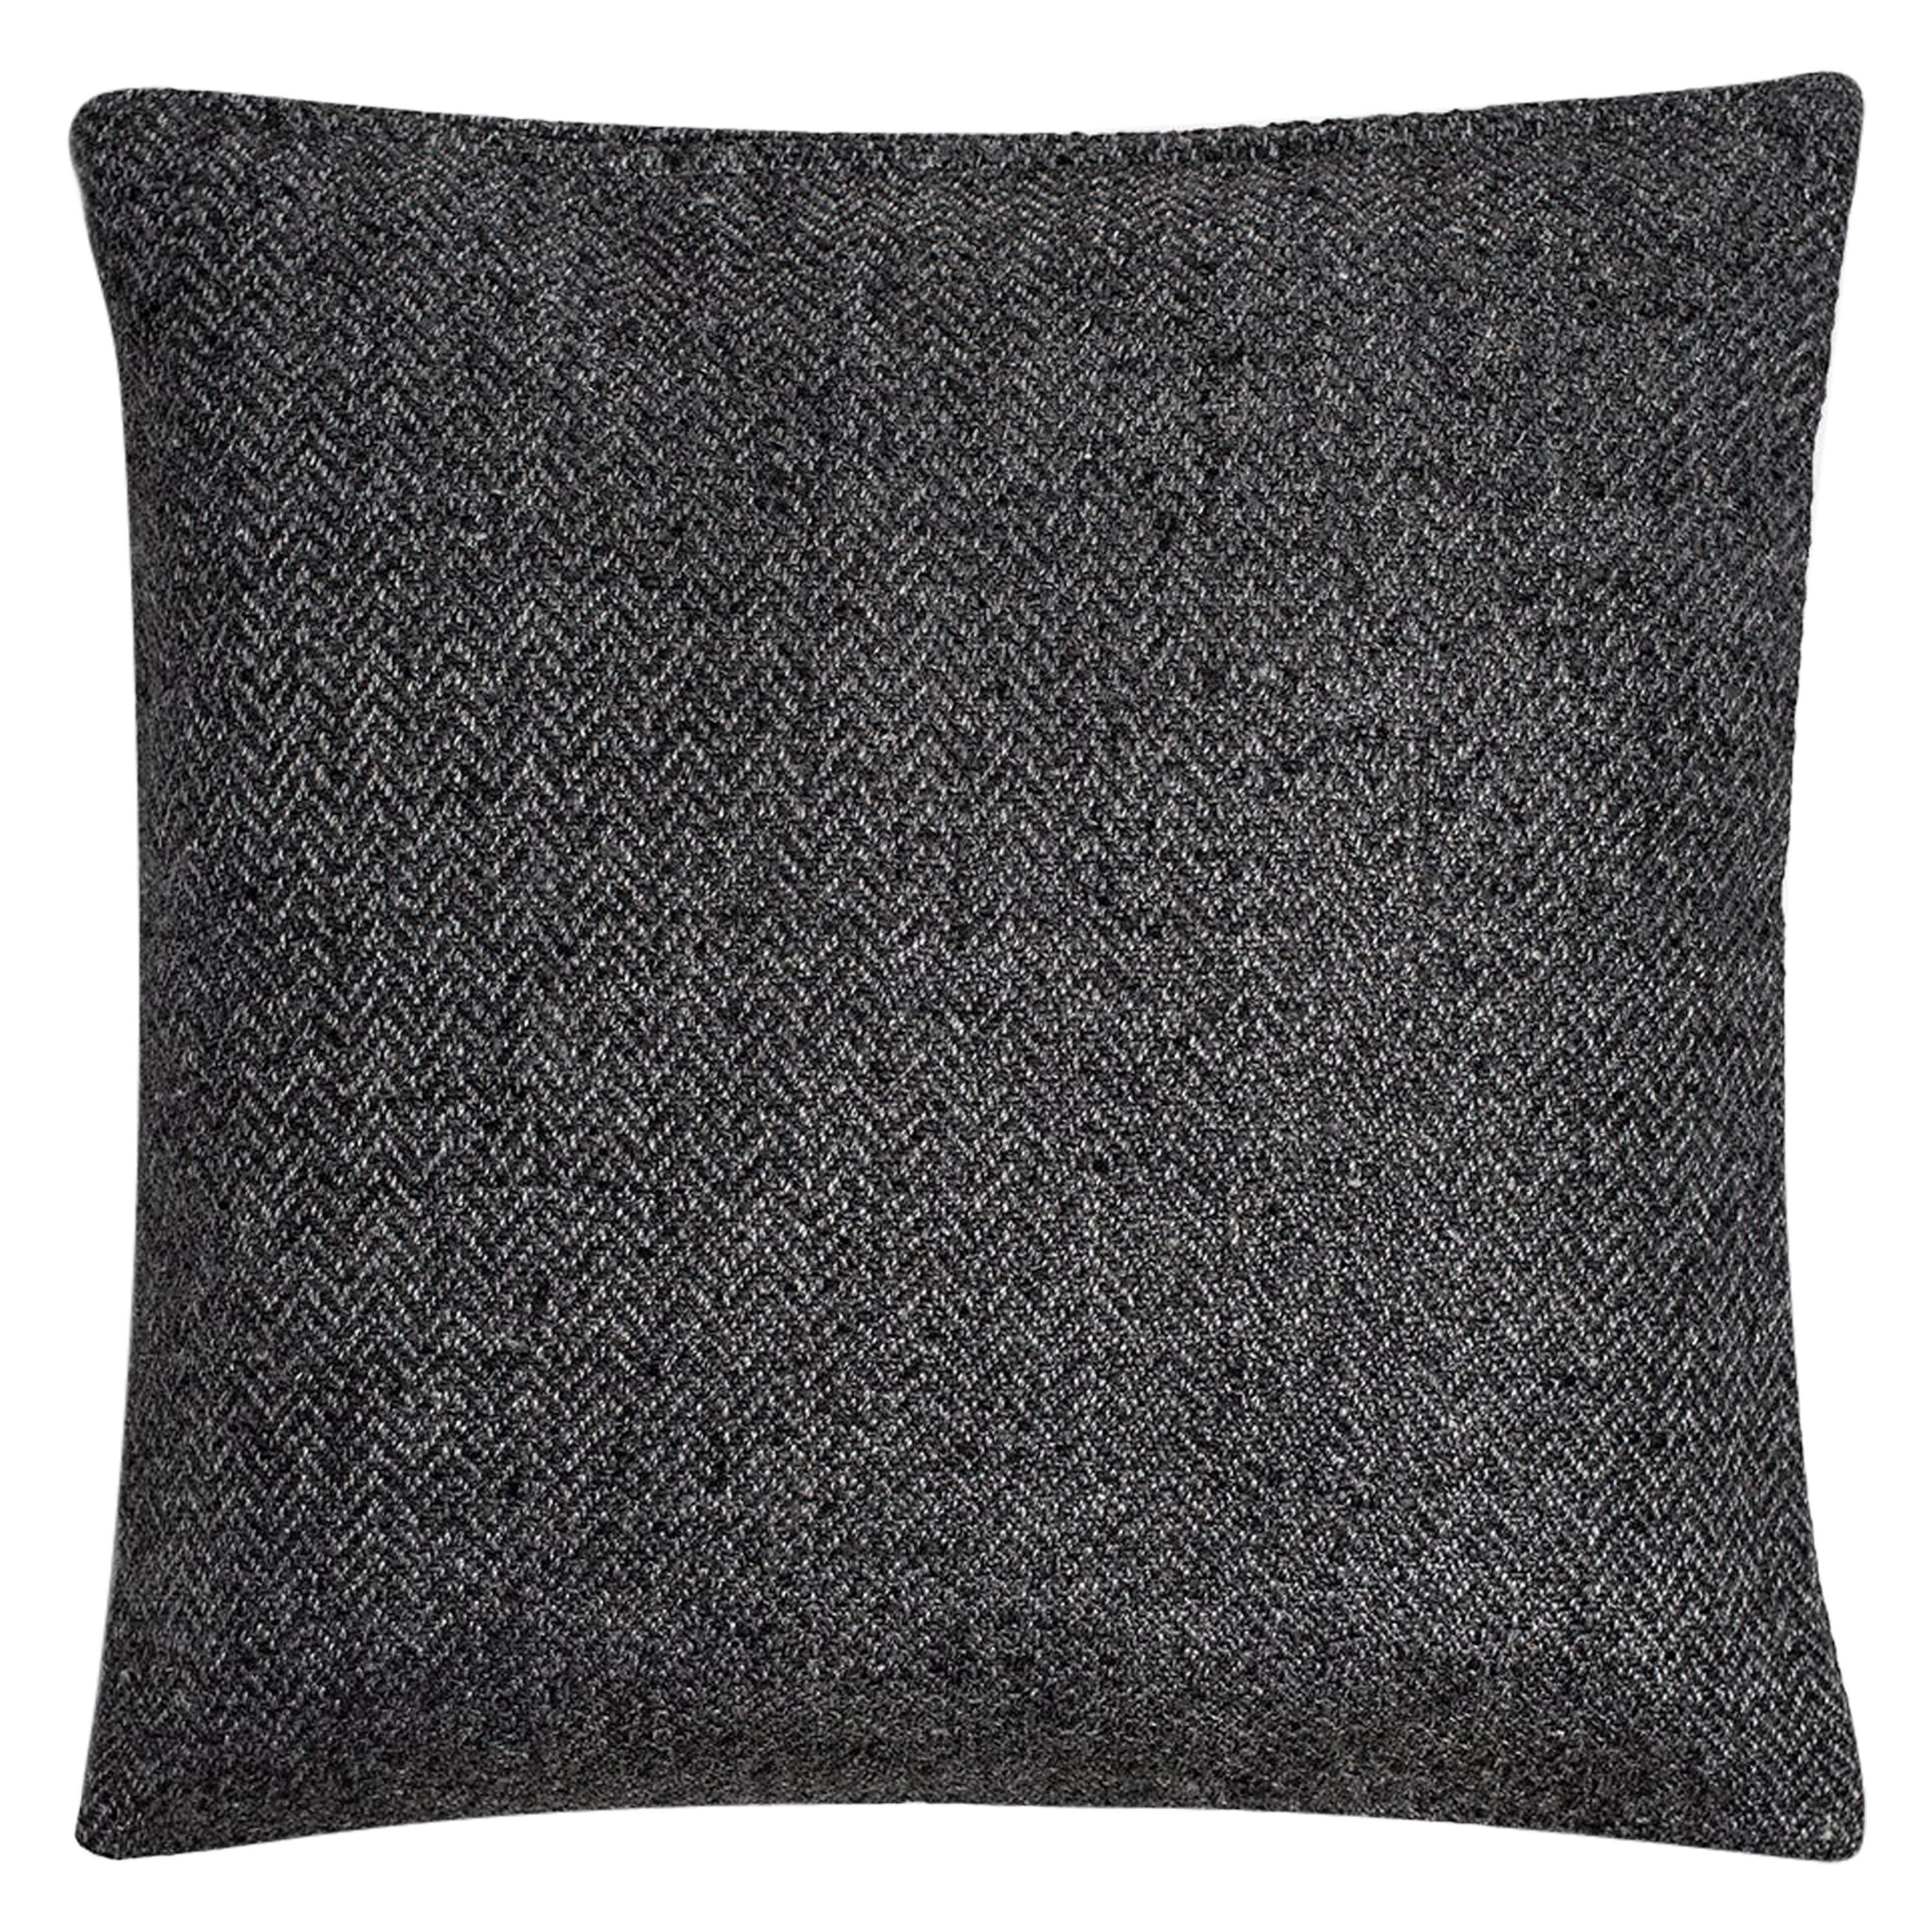 Ben Soleimani Chevron Pillow - Charcoal 22"x22" For Sale